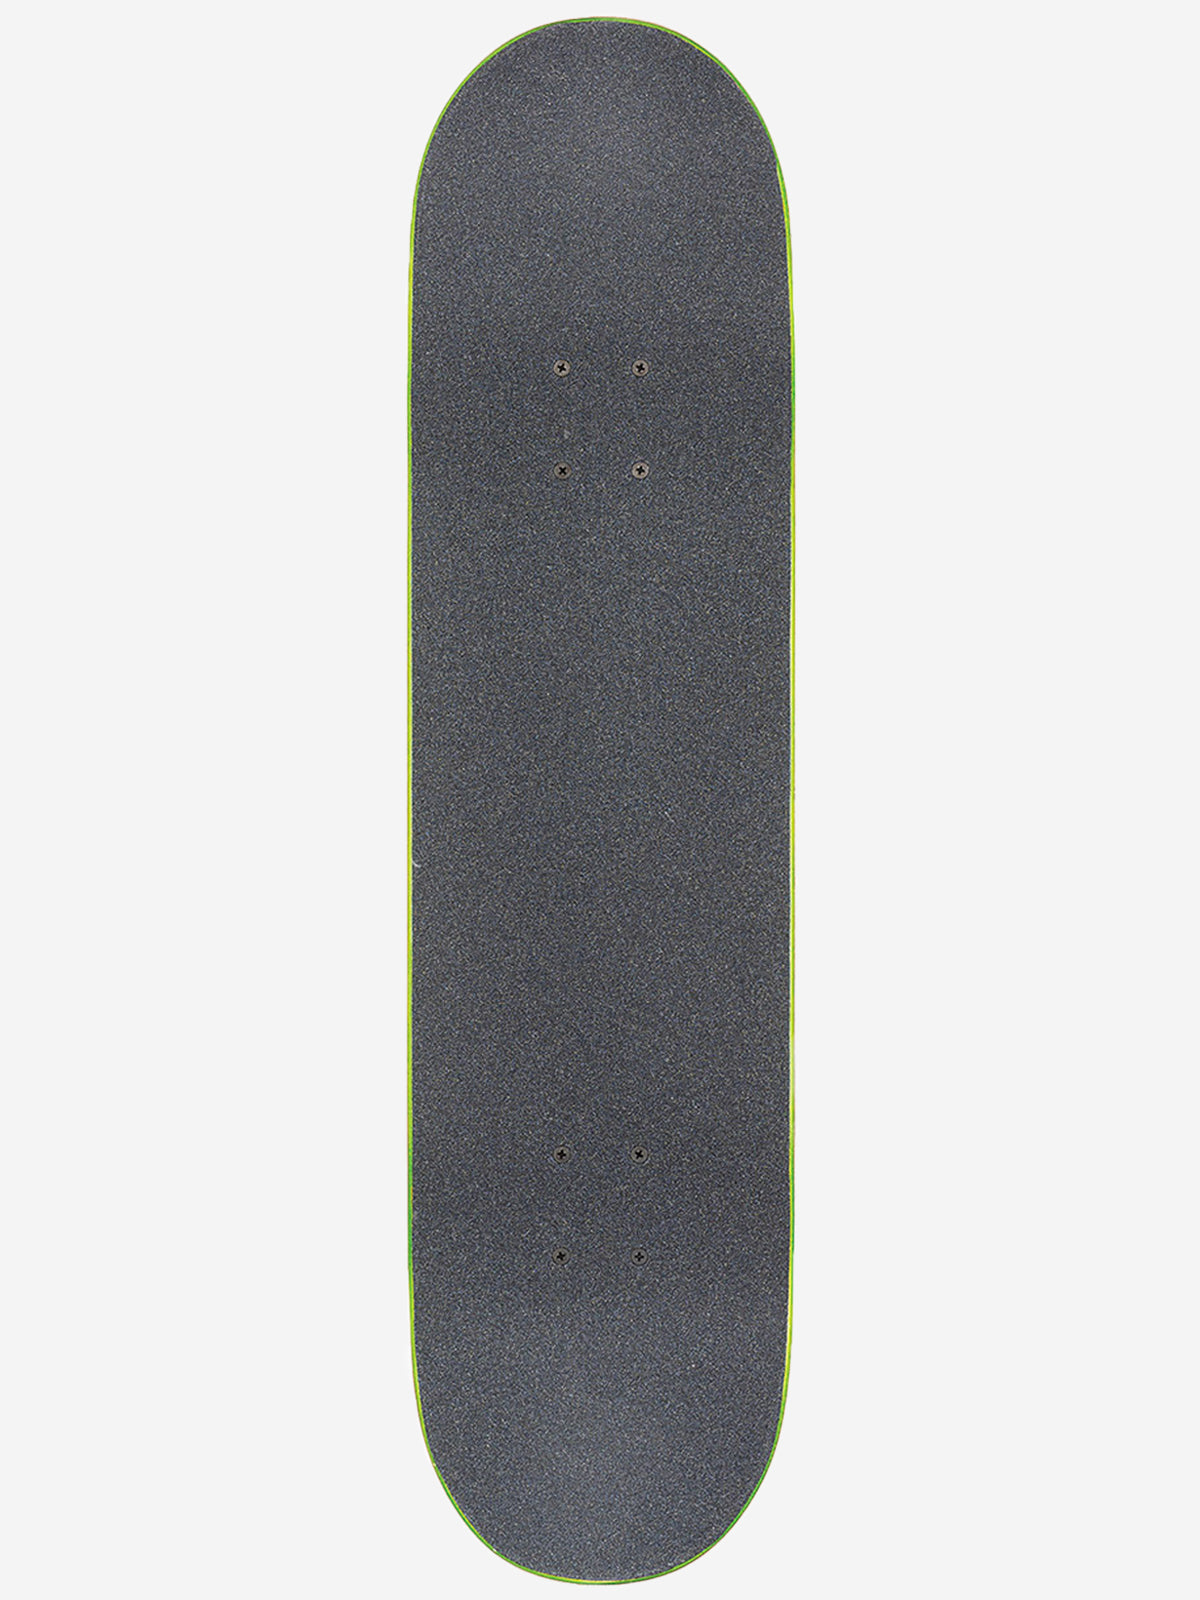 Globe - G1 Stay Tuned - Black - 8.0" Complete Skateboard